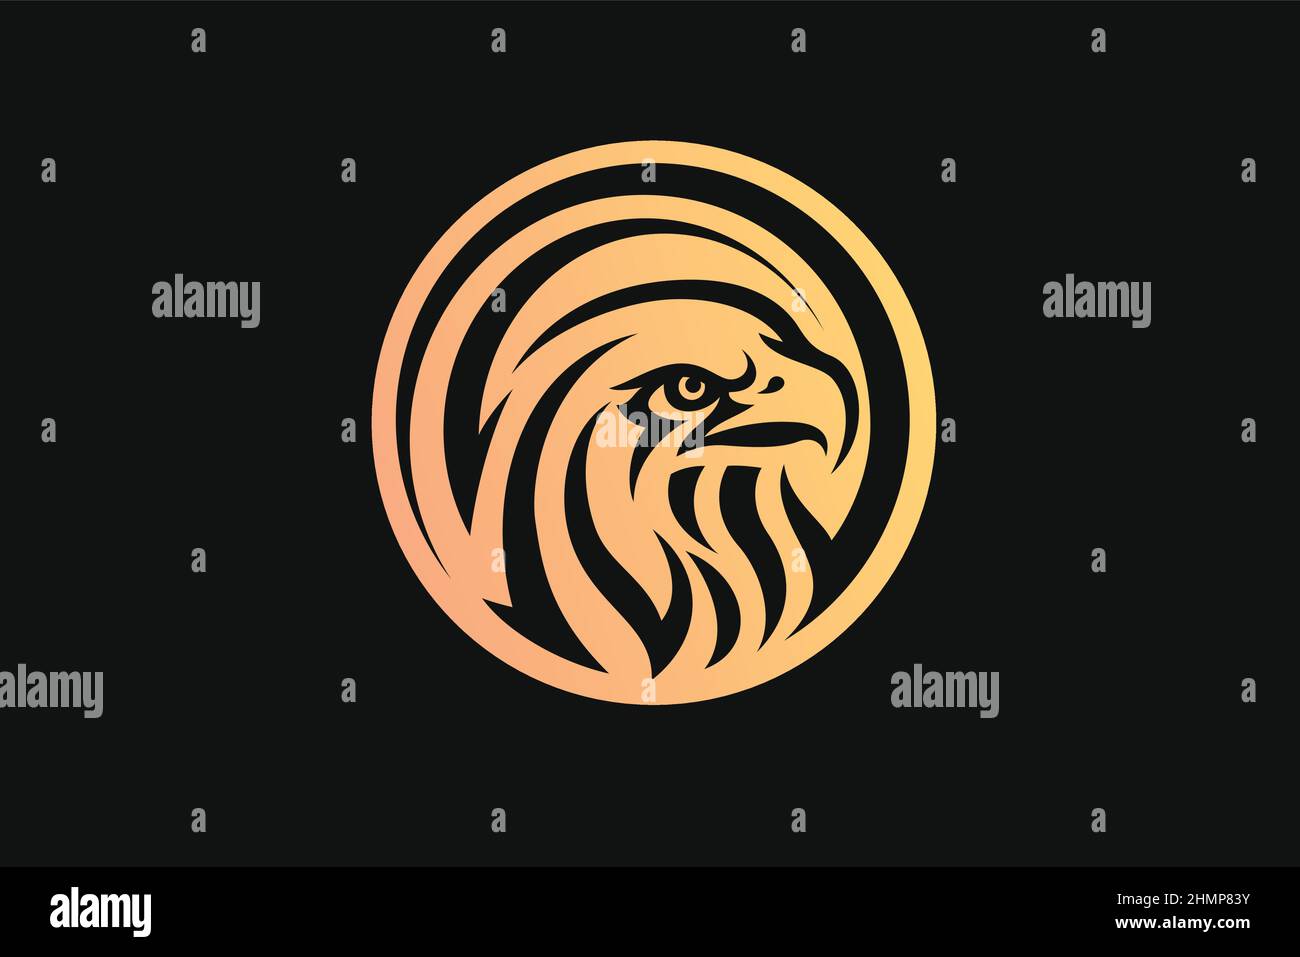 Simple Design of Eagle Head Logo Stock Vector